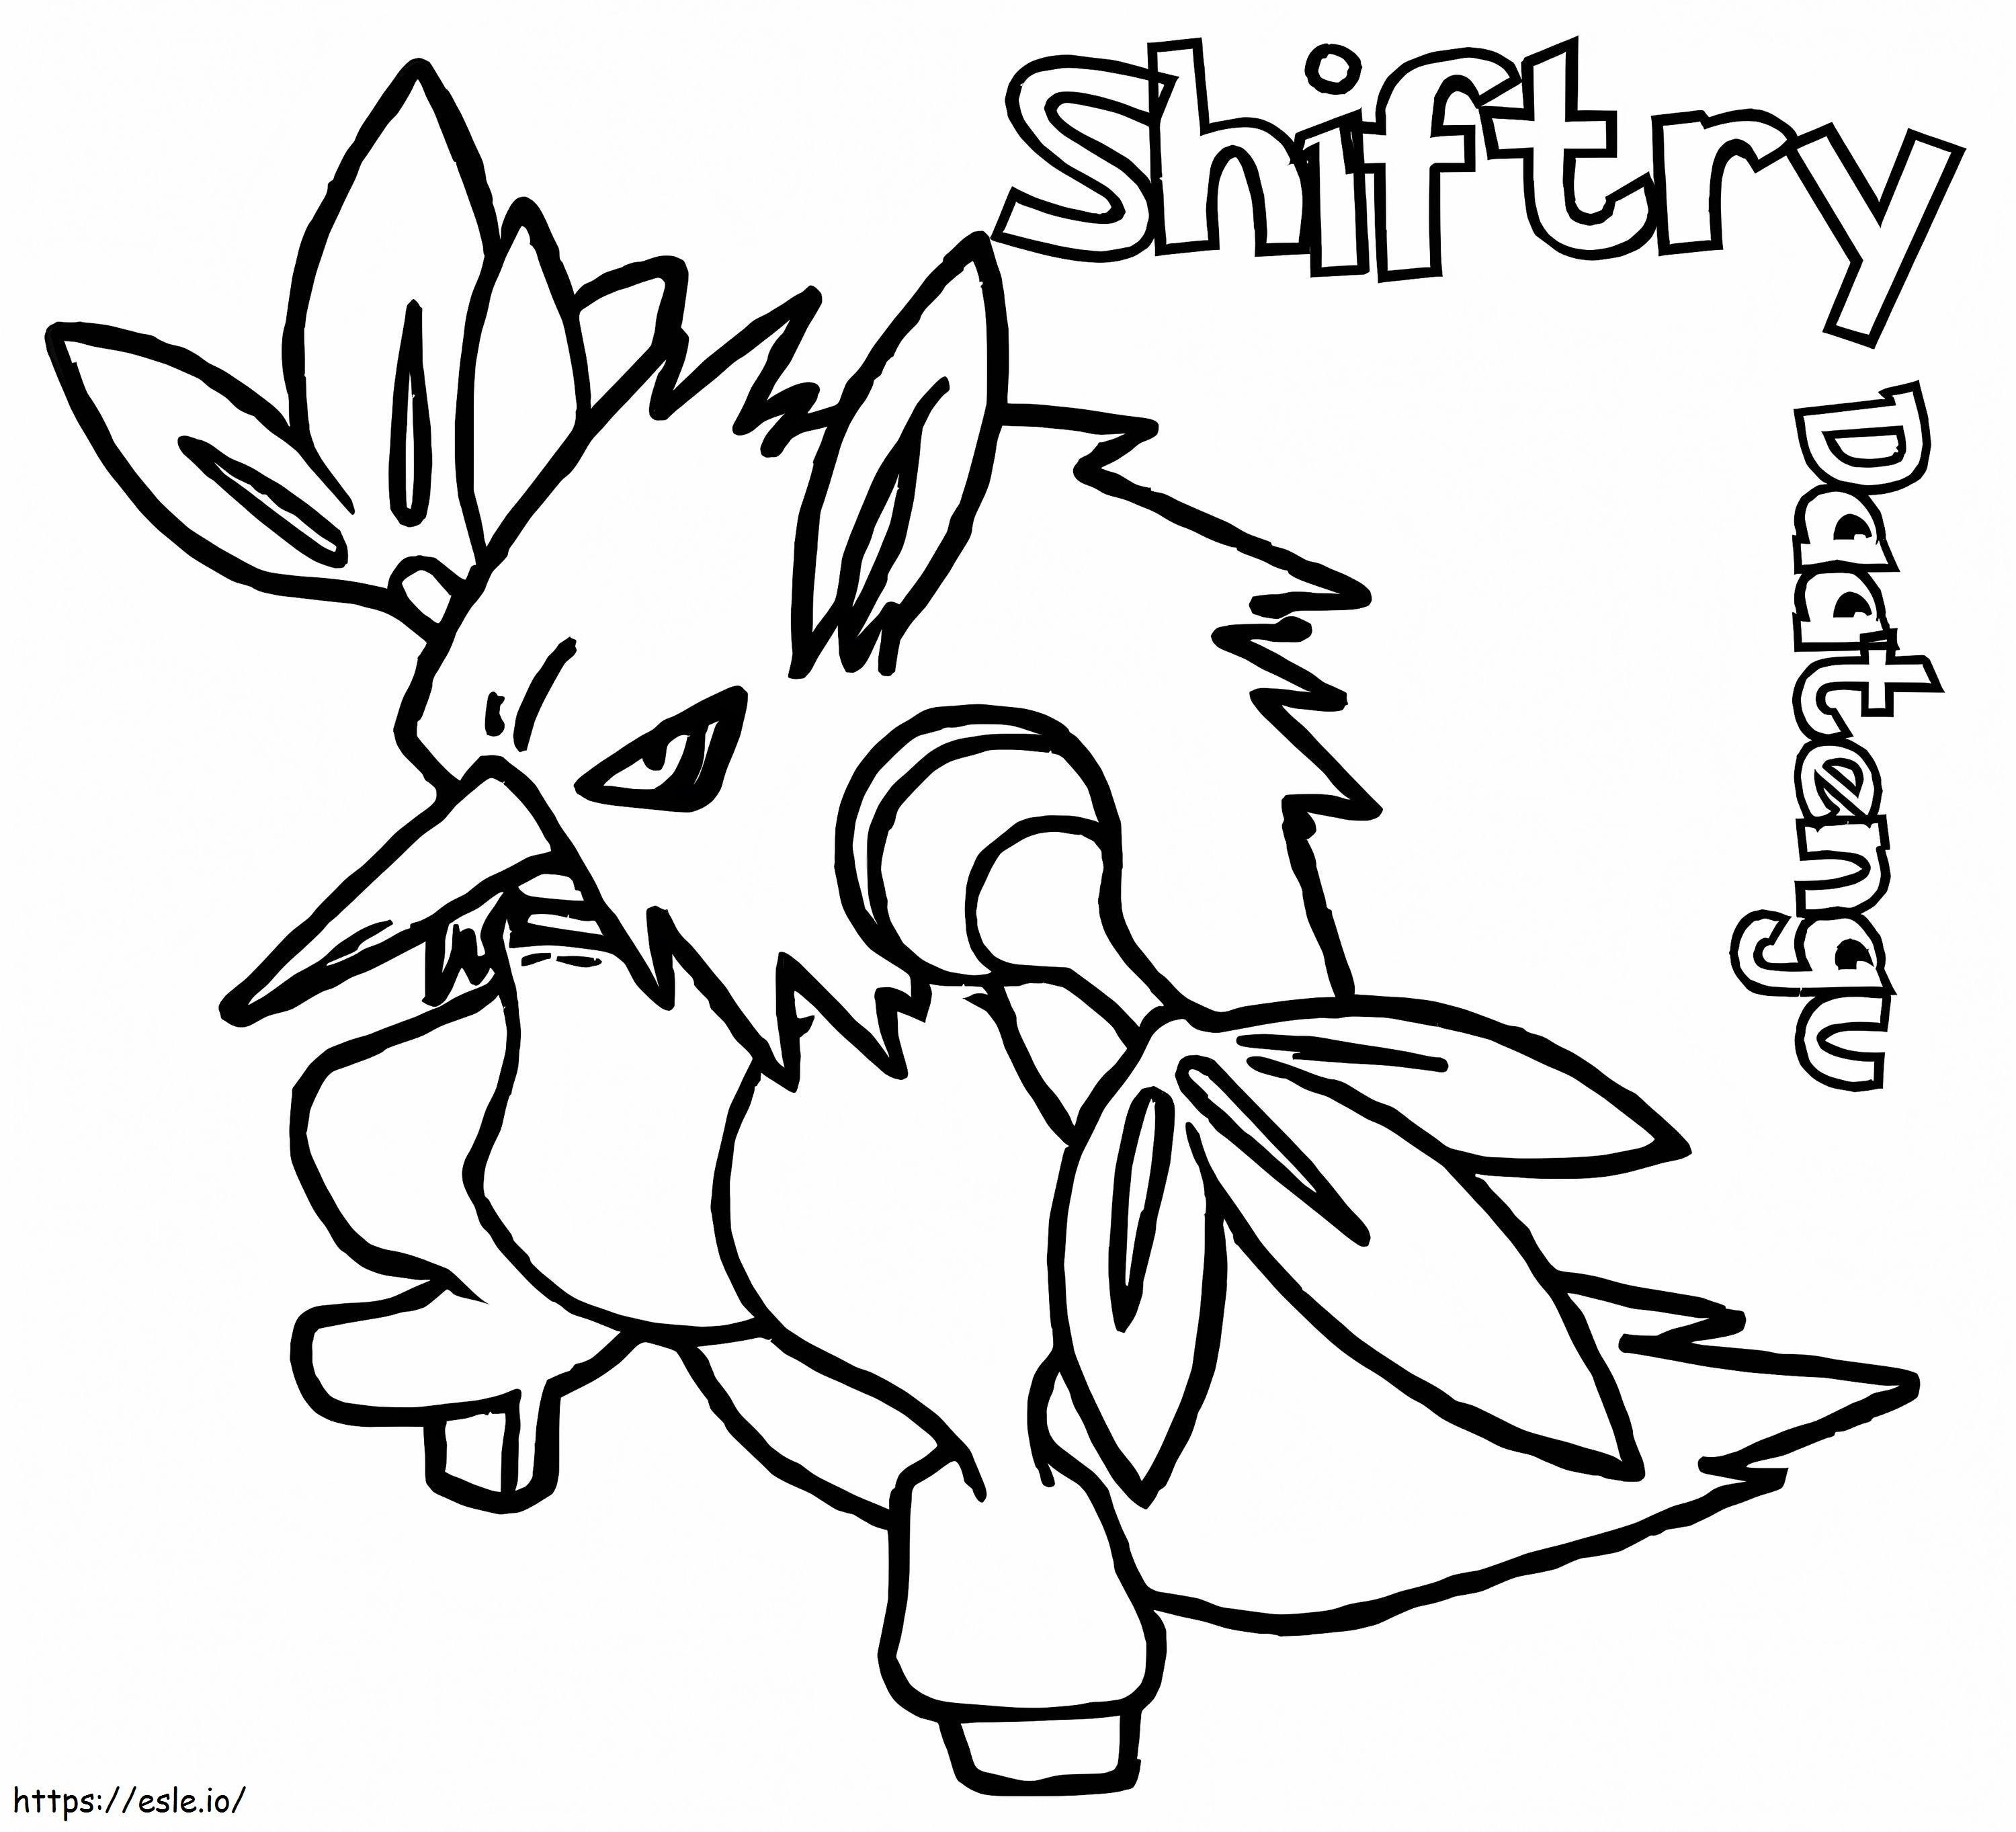 Pokémon Shiftry imprimible para colorear